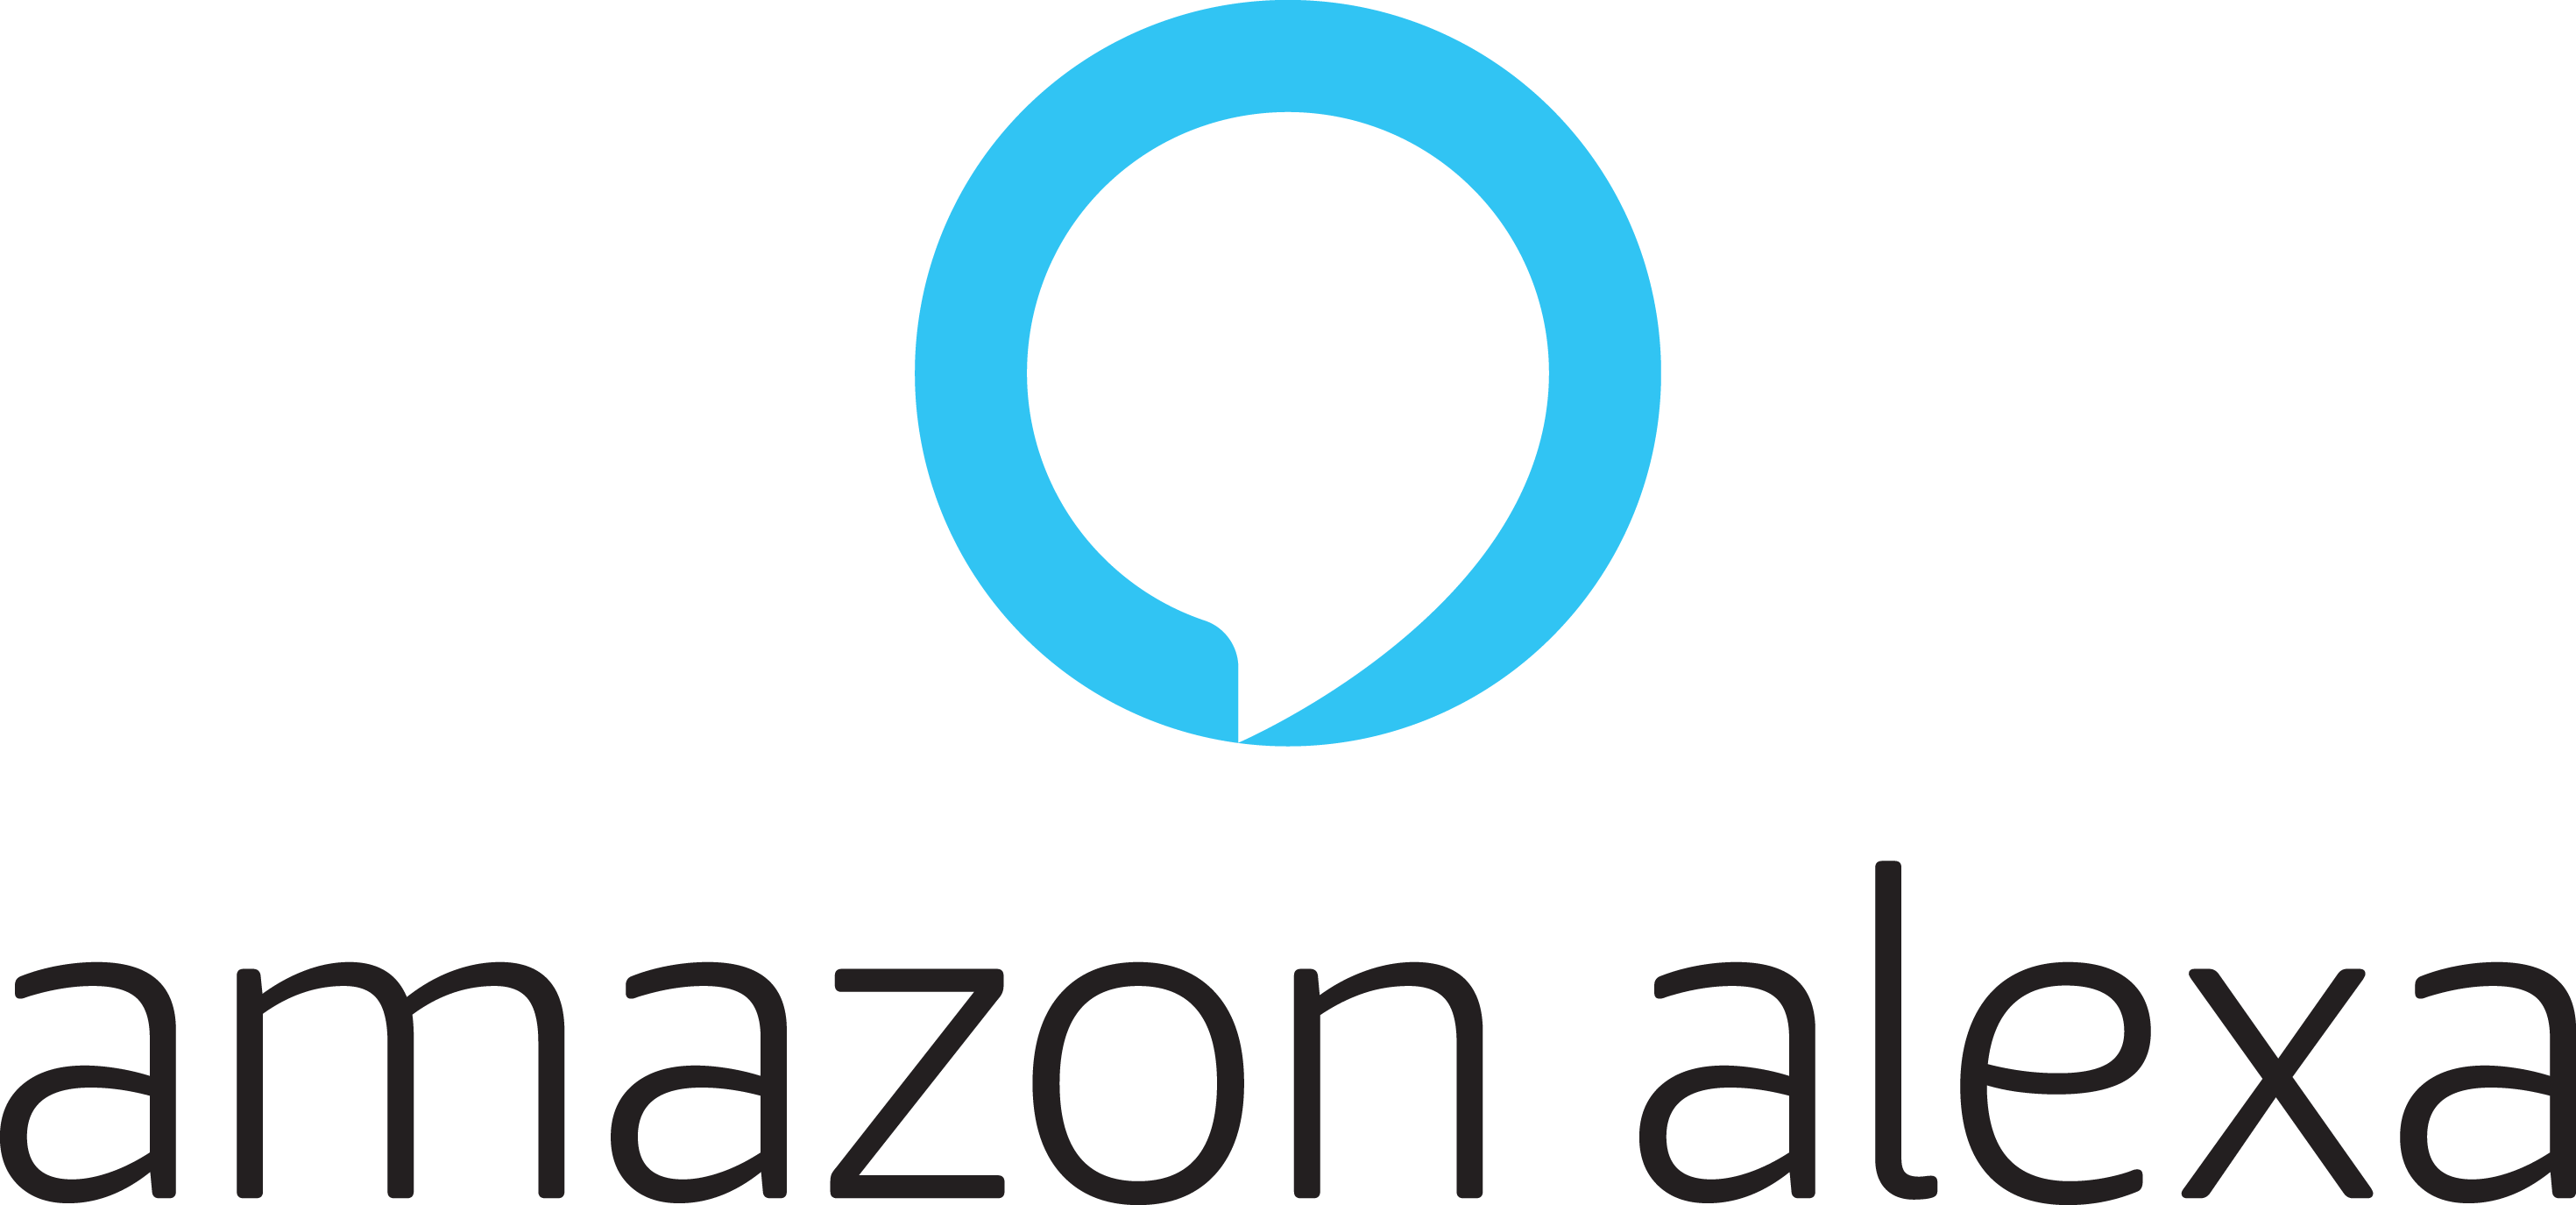 Alexa.com Logo - Amazon Alexa Logo. Propel Marketing & Design, Inc